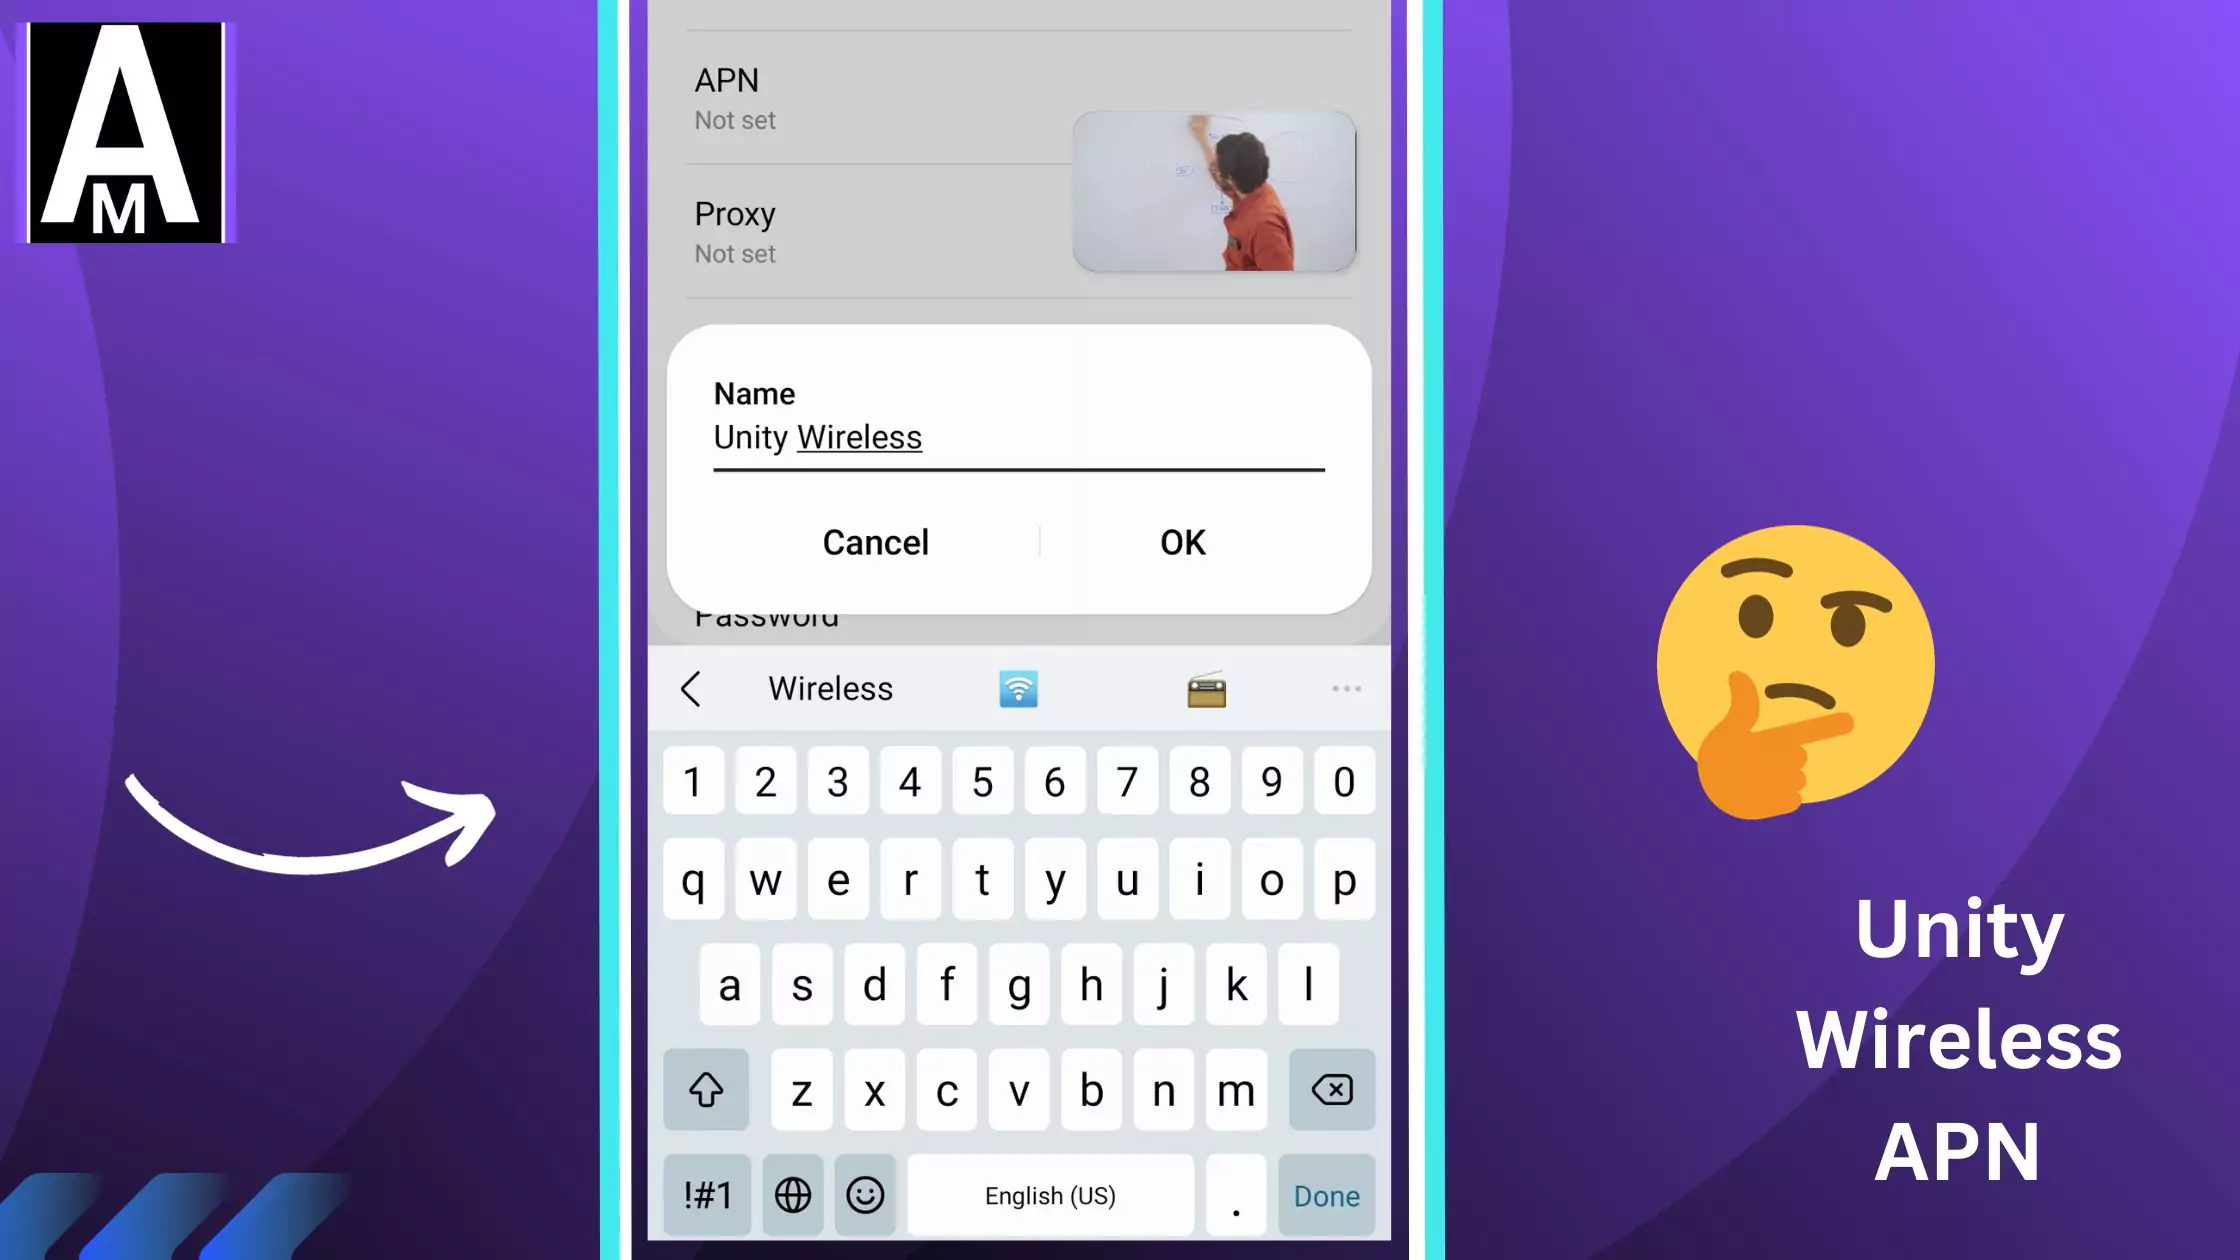 Unity Wireless APN screenshot with thinking emoji